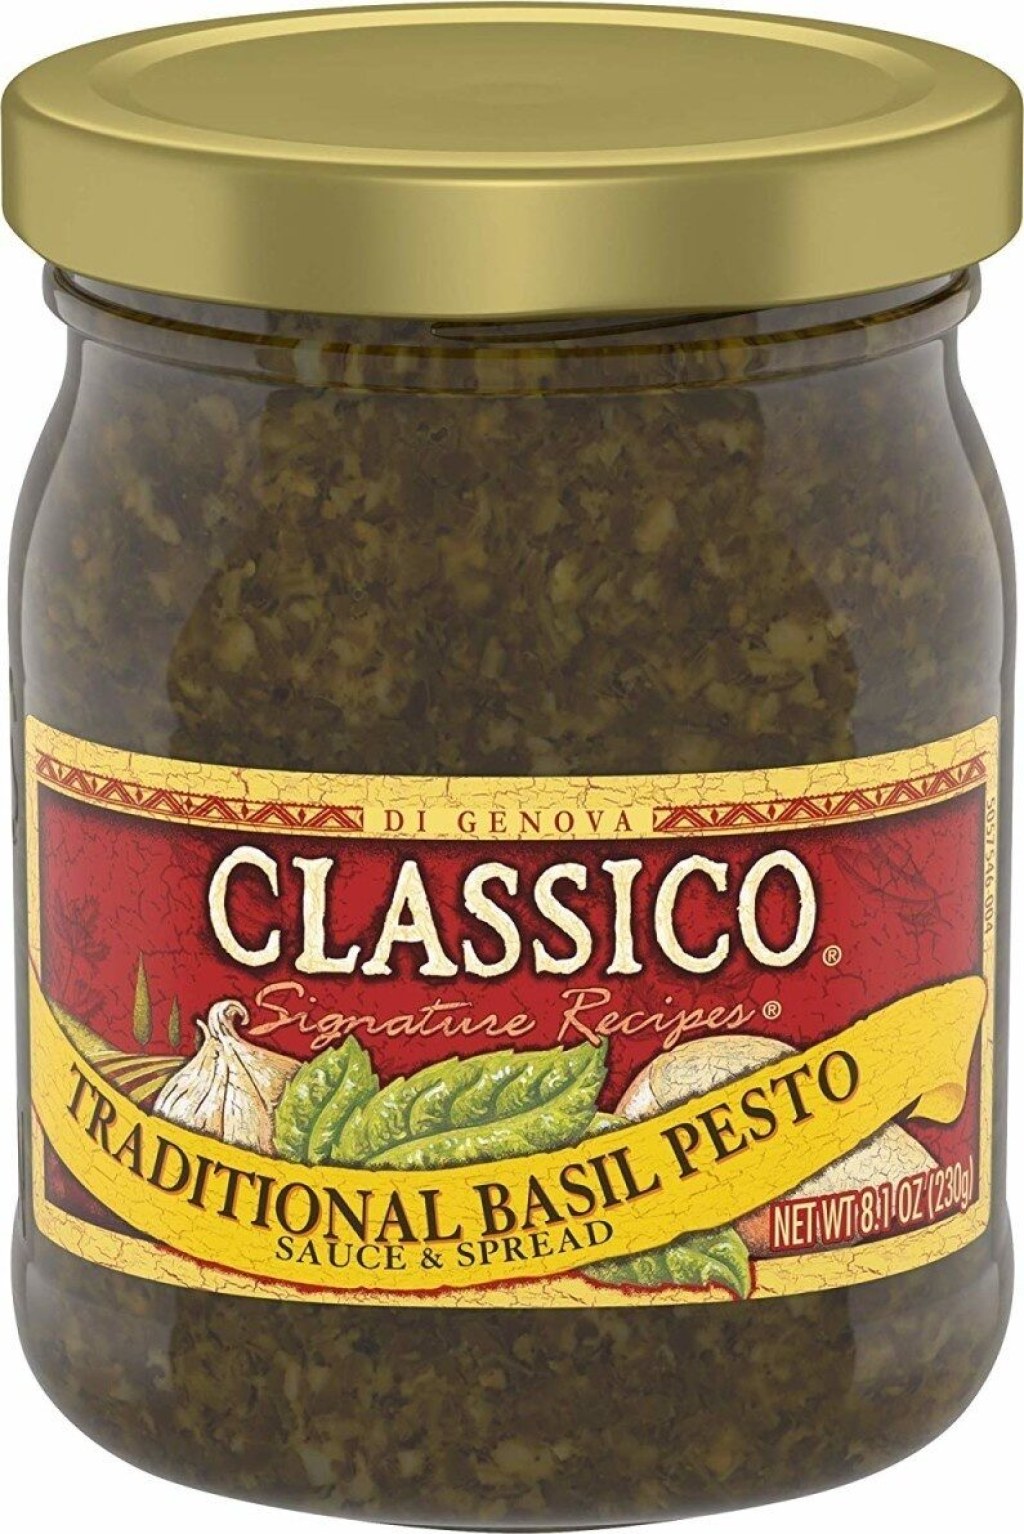 Picture of: Traditional basil pesto – Classico